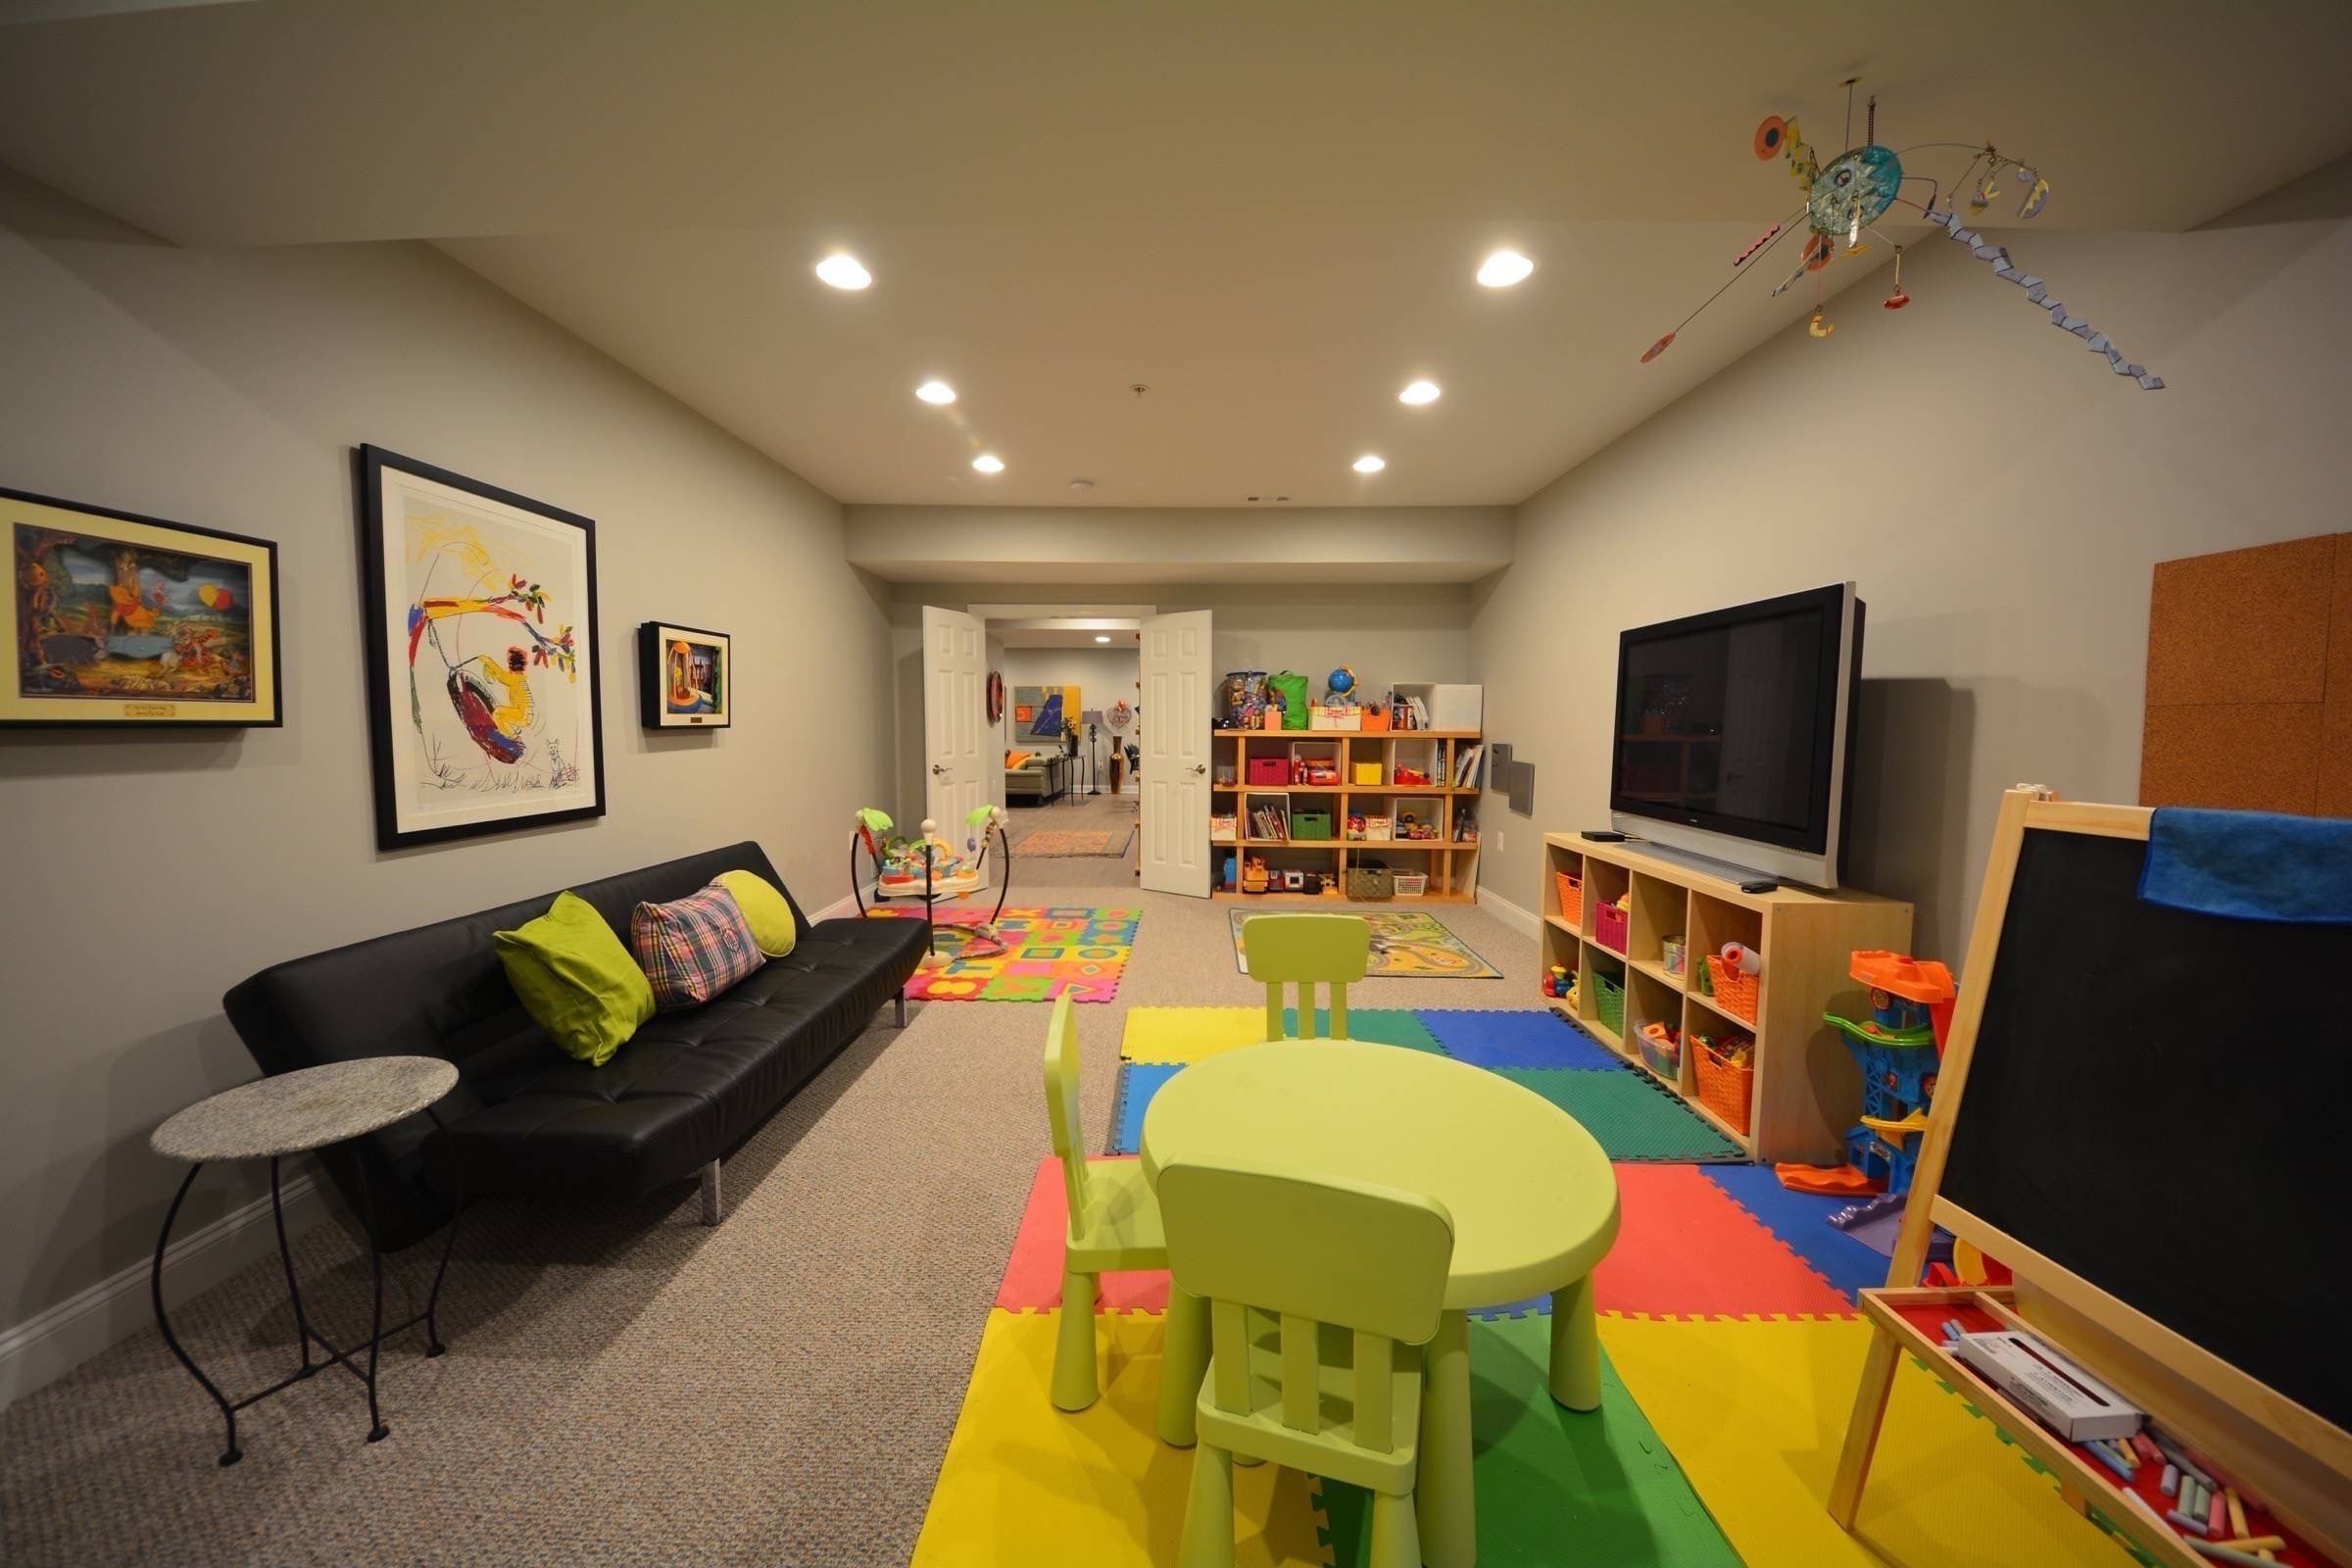 Hot Kids Basement Playroom Ideas Design To Basement Plus Best 19 Kids  Playroom Ideas For Every